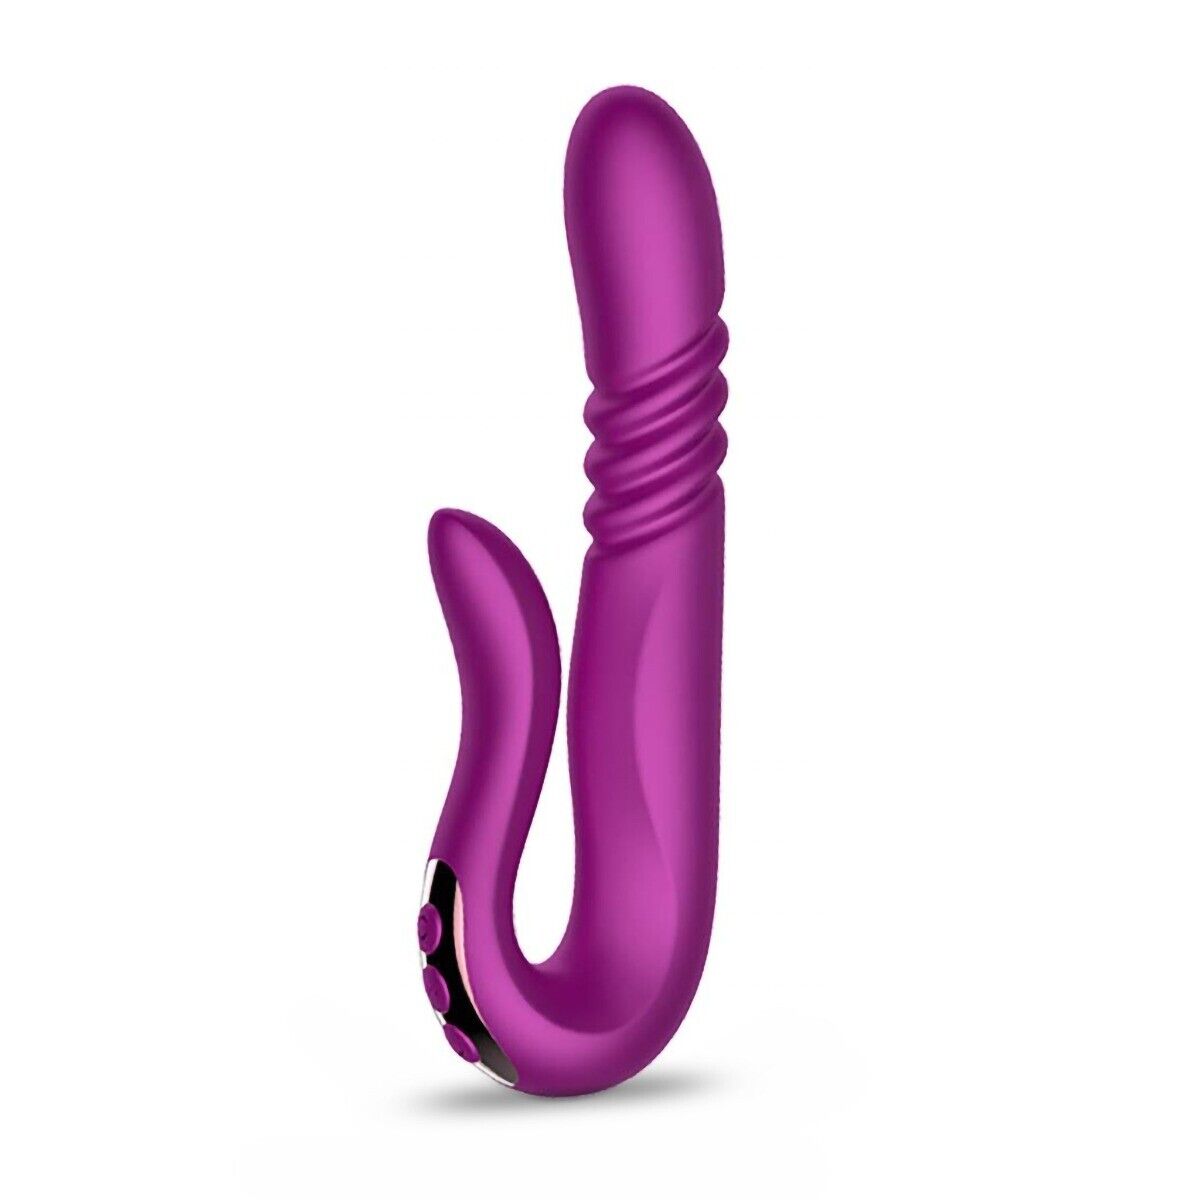 Double Ended Thrusting G-spot Anal Dildo Vibrator Sex-toys for Women Couples